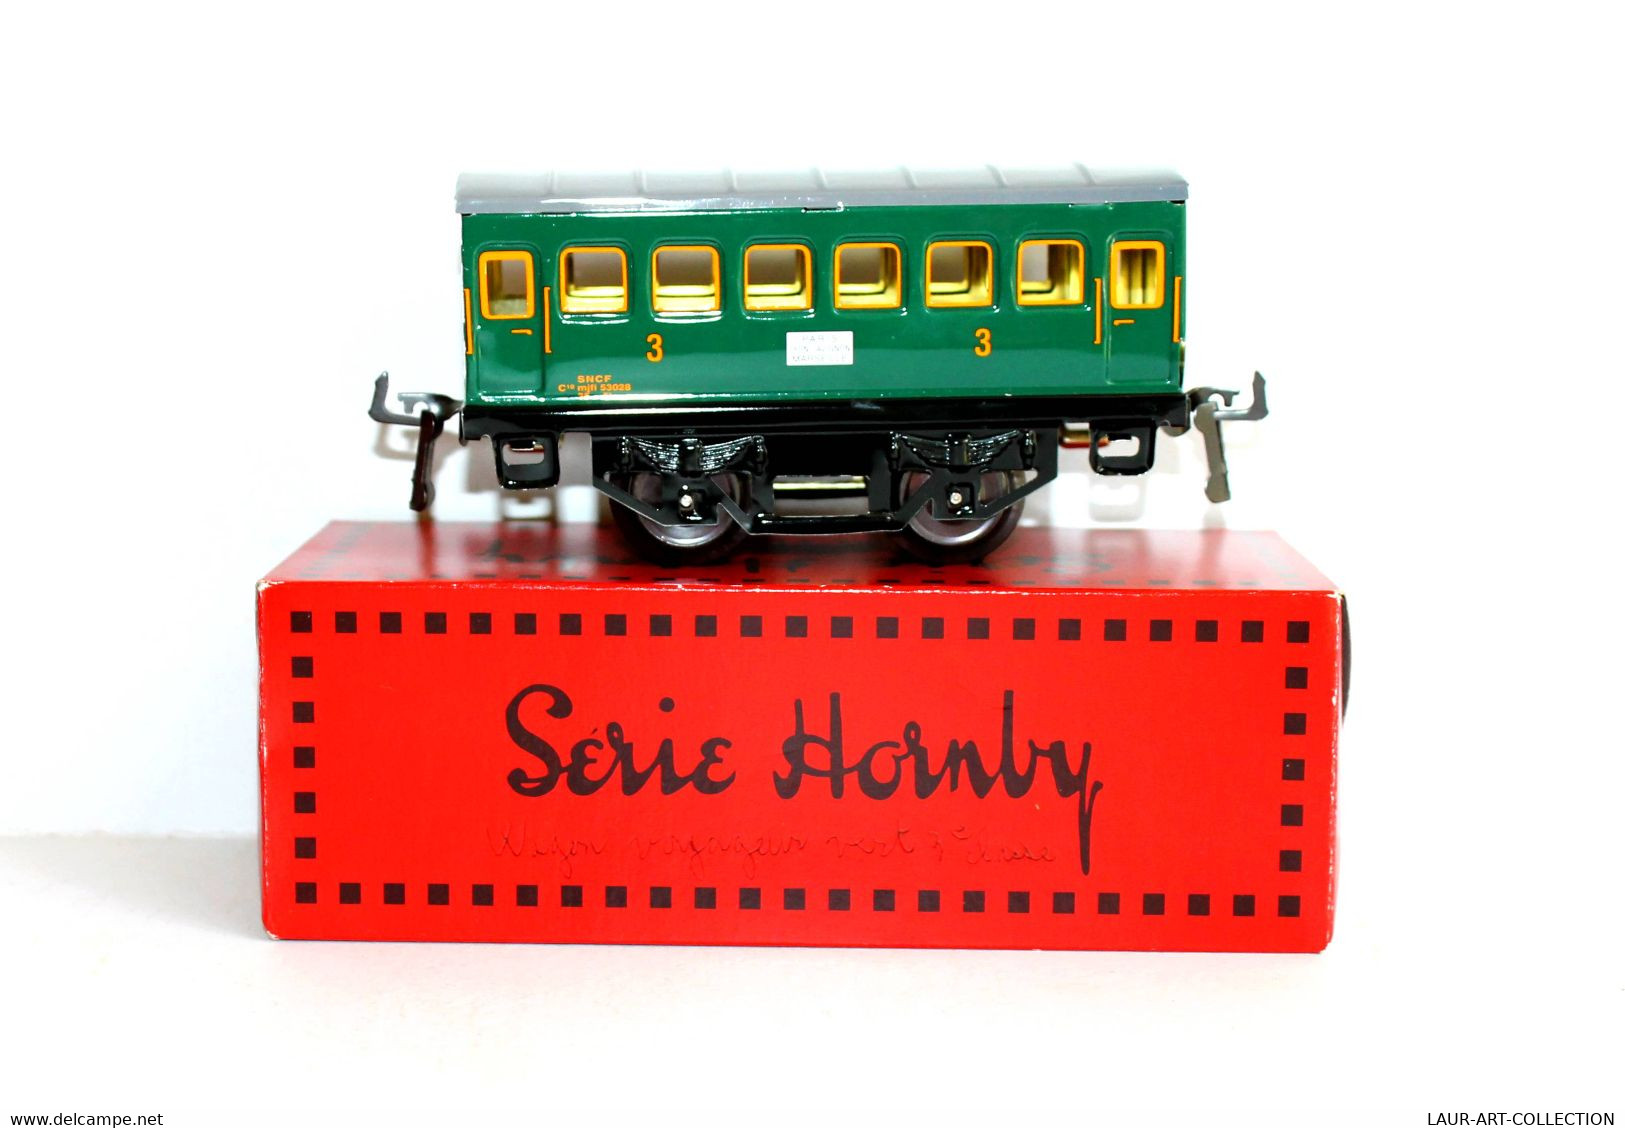 SERIE HORNBY - VOITURE VOYAGEUR - ECH O N°40 2371 3e CLASSE Mjfi 53028 PARIS-MAR / FERROVIAIRE TRAIN CHEMIN FER (2105.12 - Passenger Trains